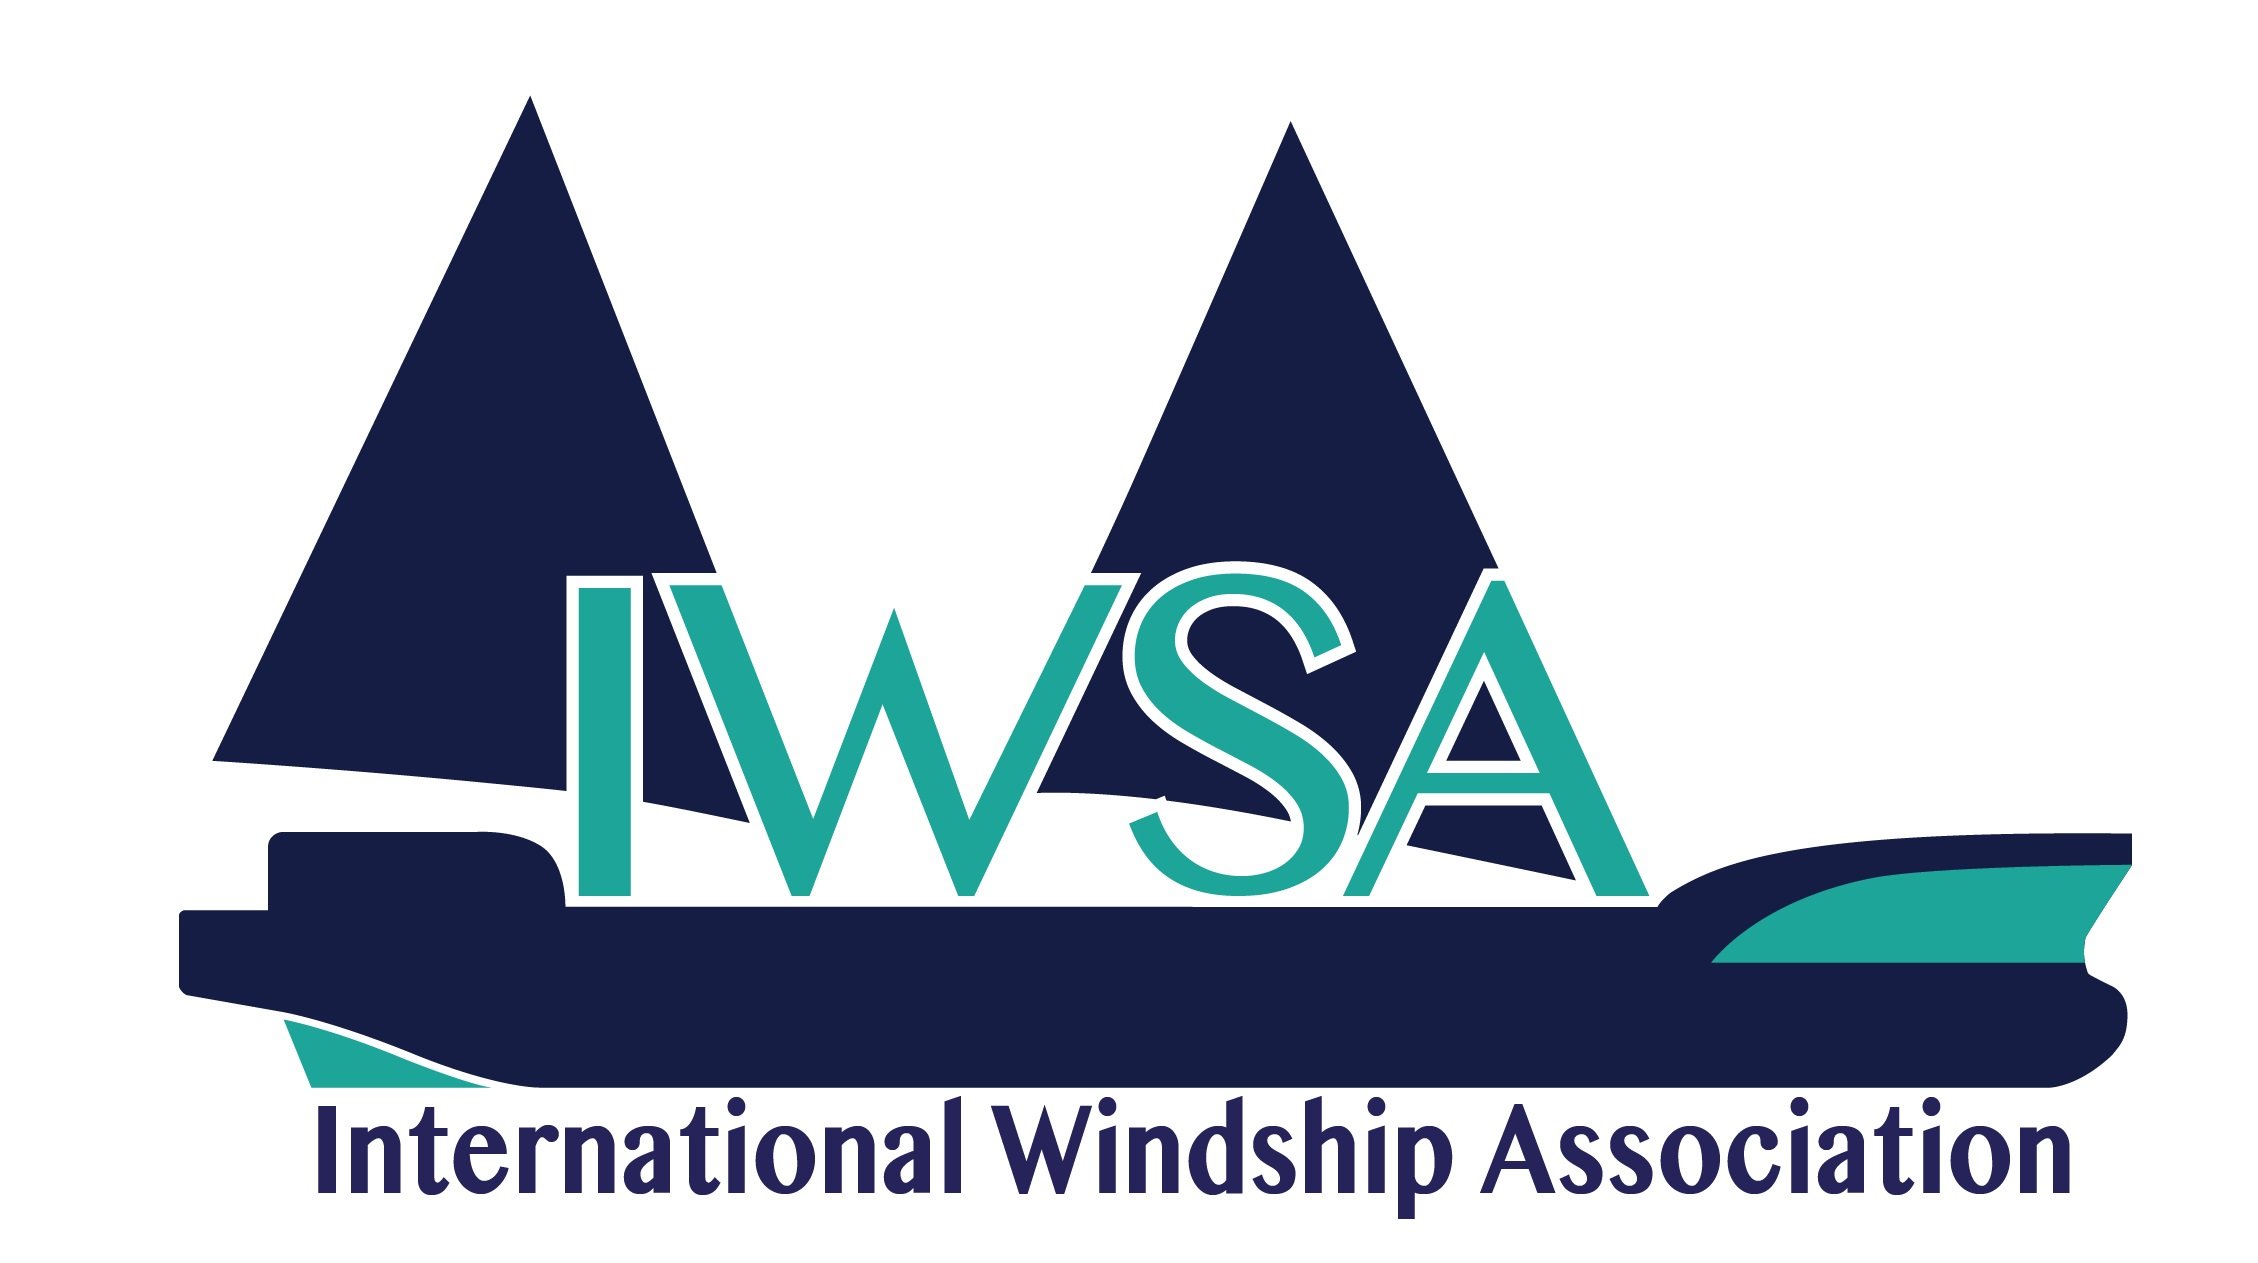 IWSA logo JPEG.jpg